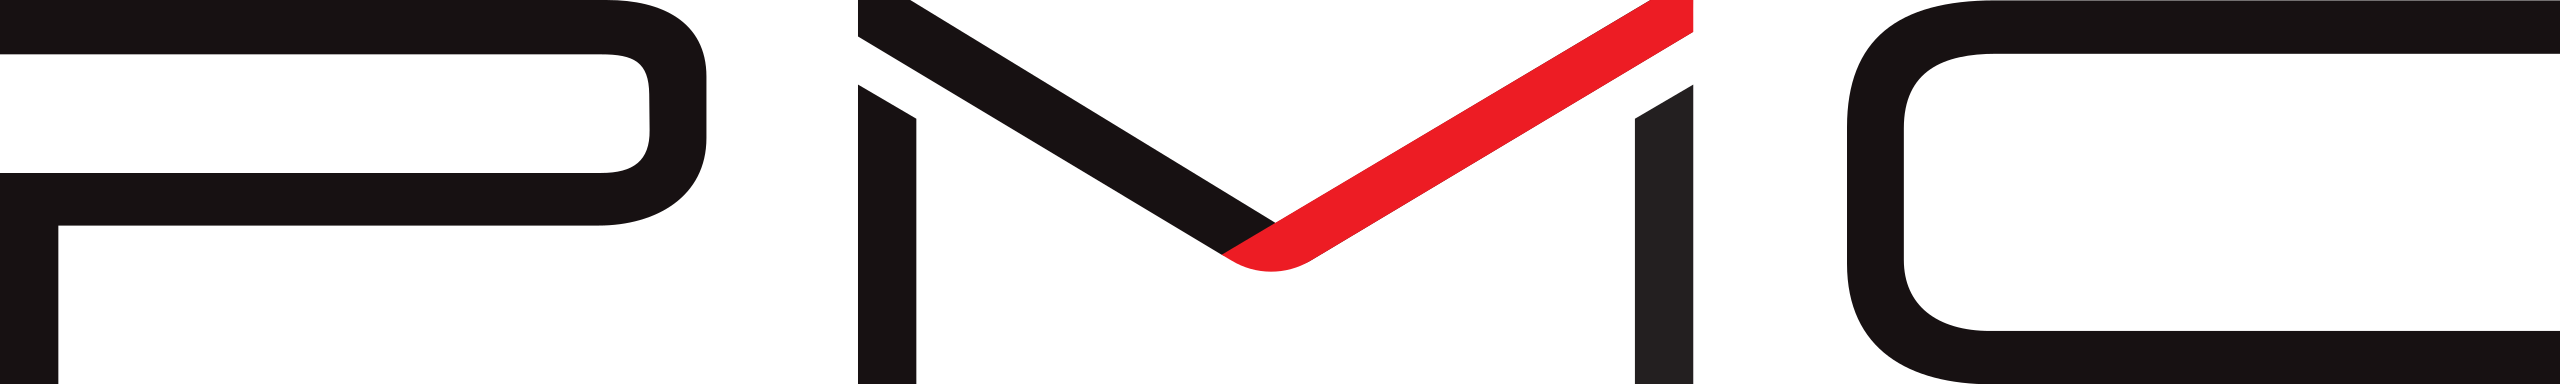 2560px-Penske_Media_Corporation_2014_logo.svg